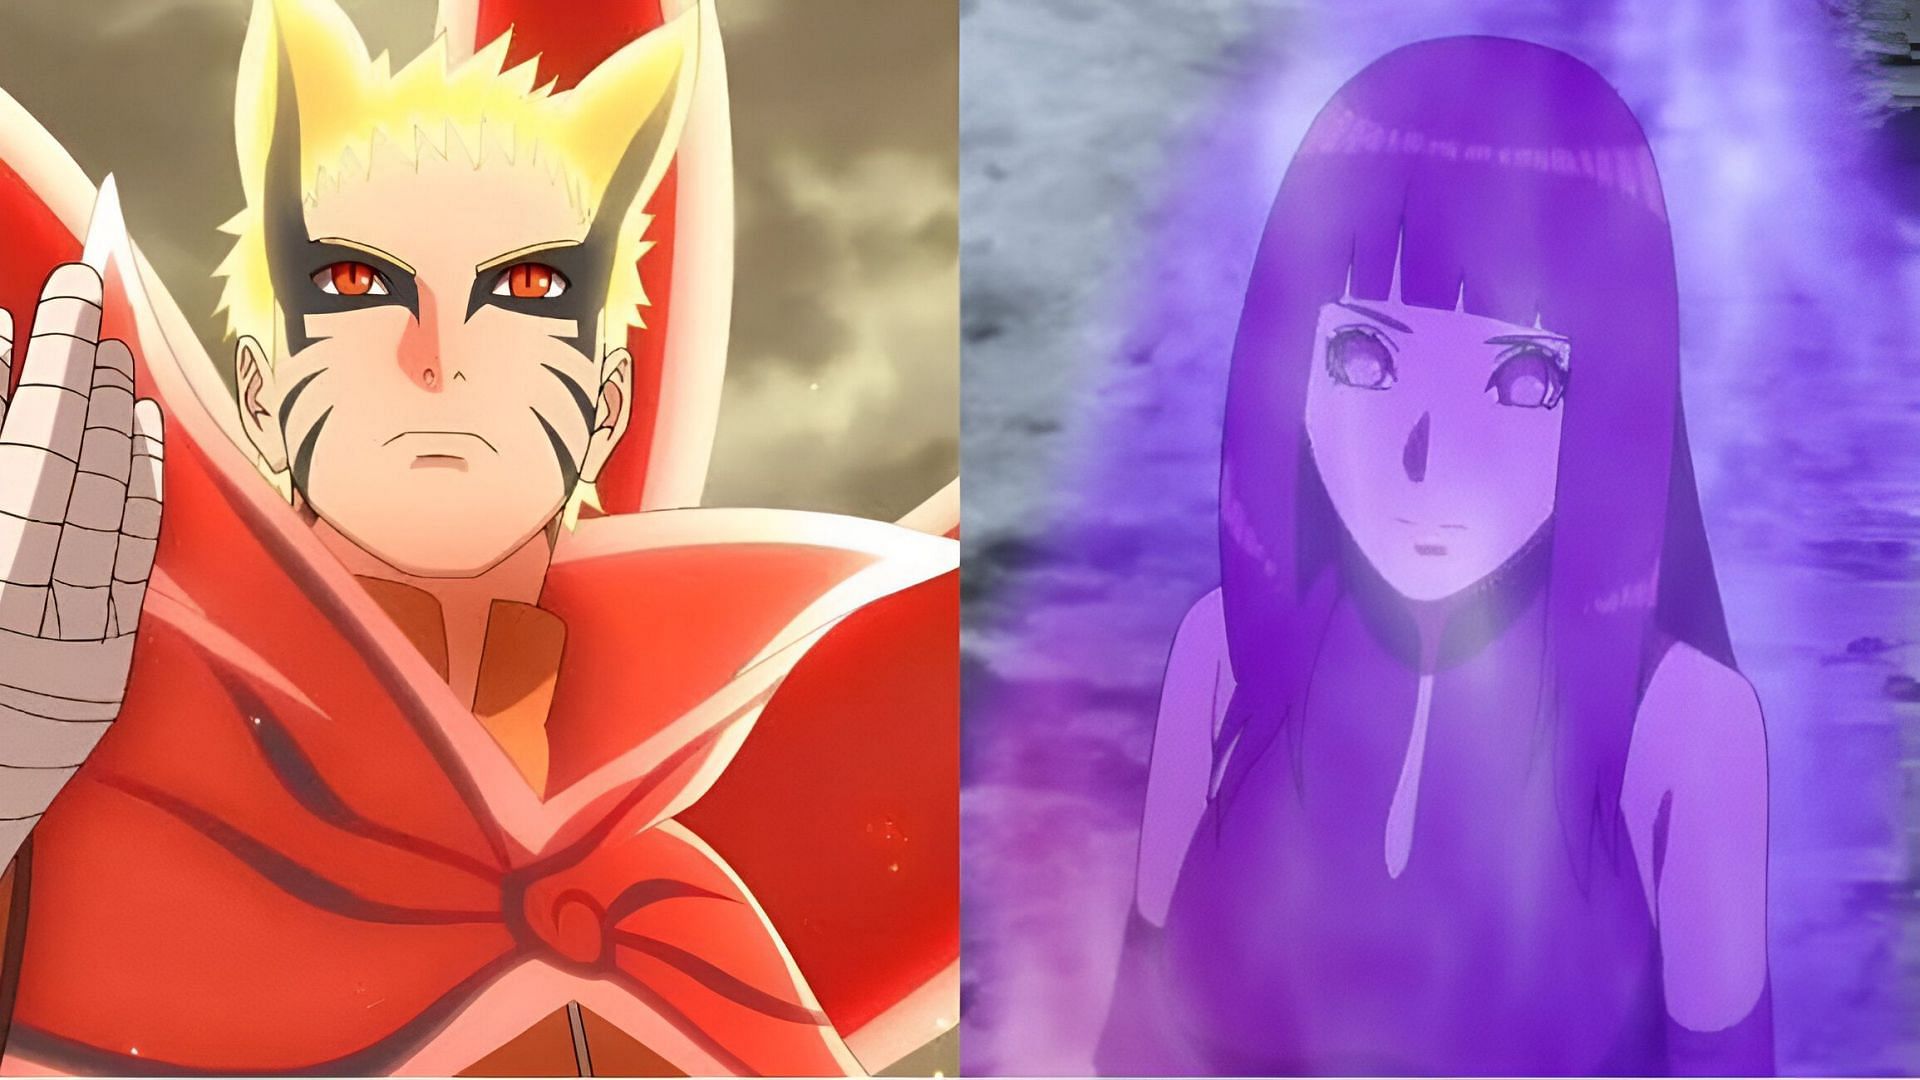 Naruto (left) and Hinata (right) (Image via Studio Pierrot)